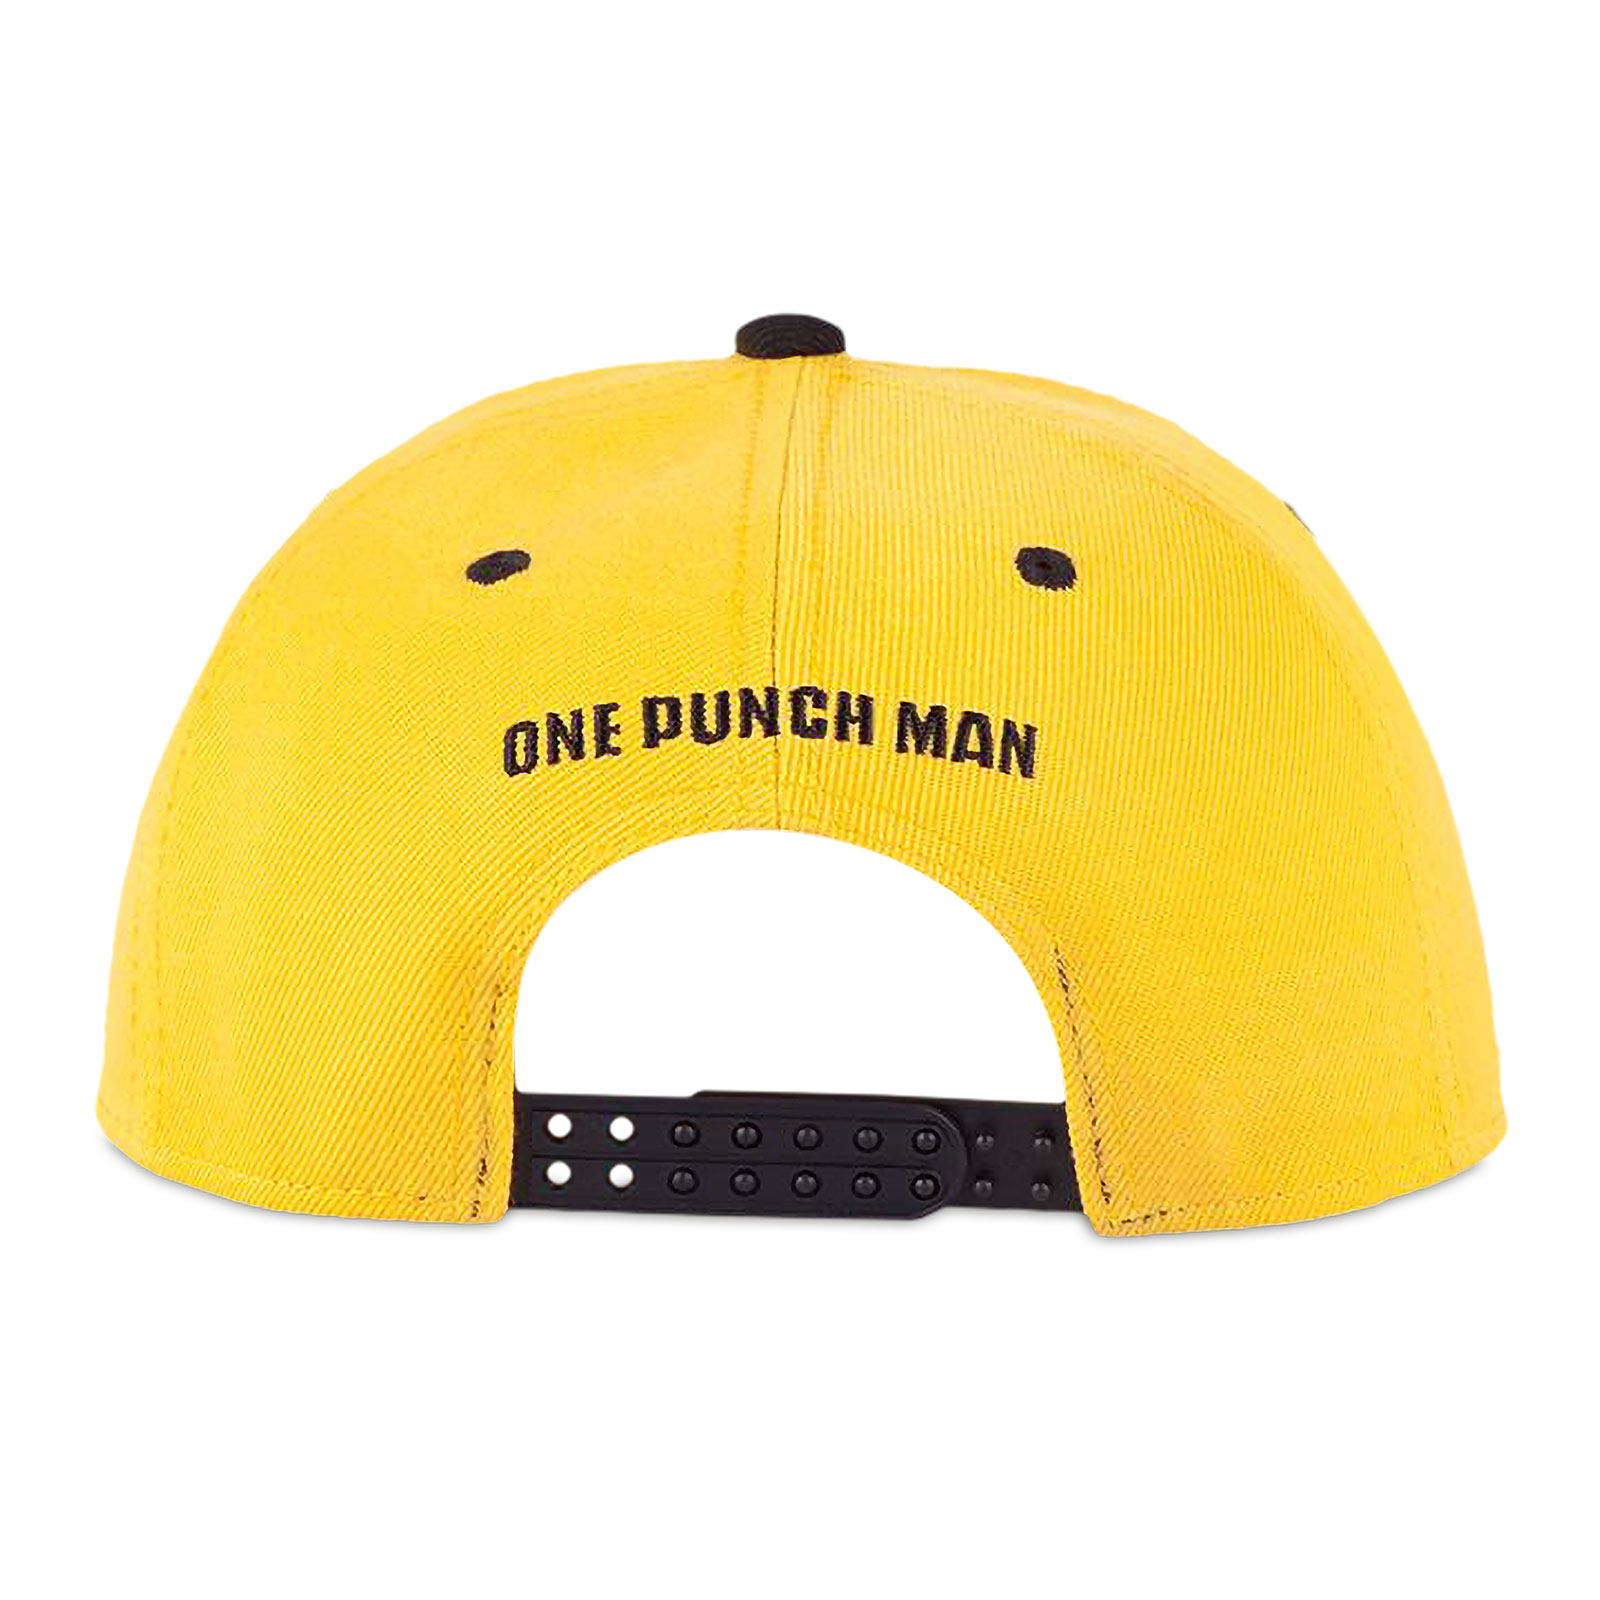 One Punch Man - Saitama Faust Snapback Cap